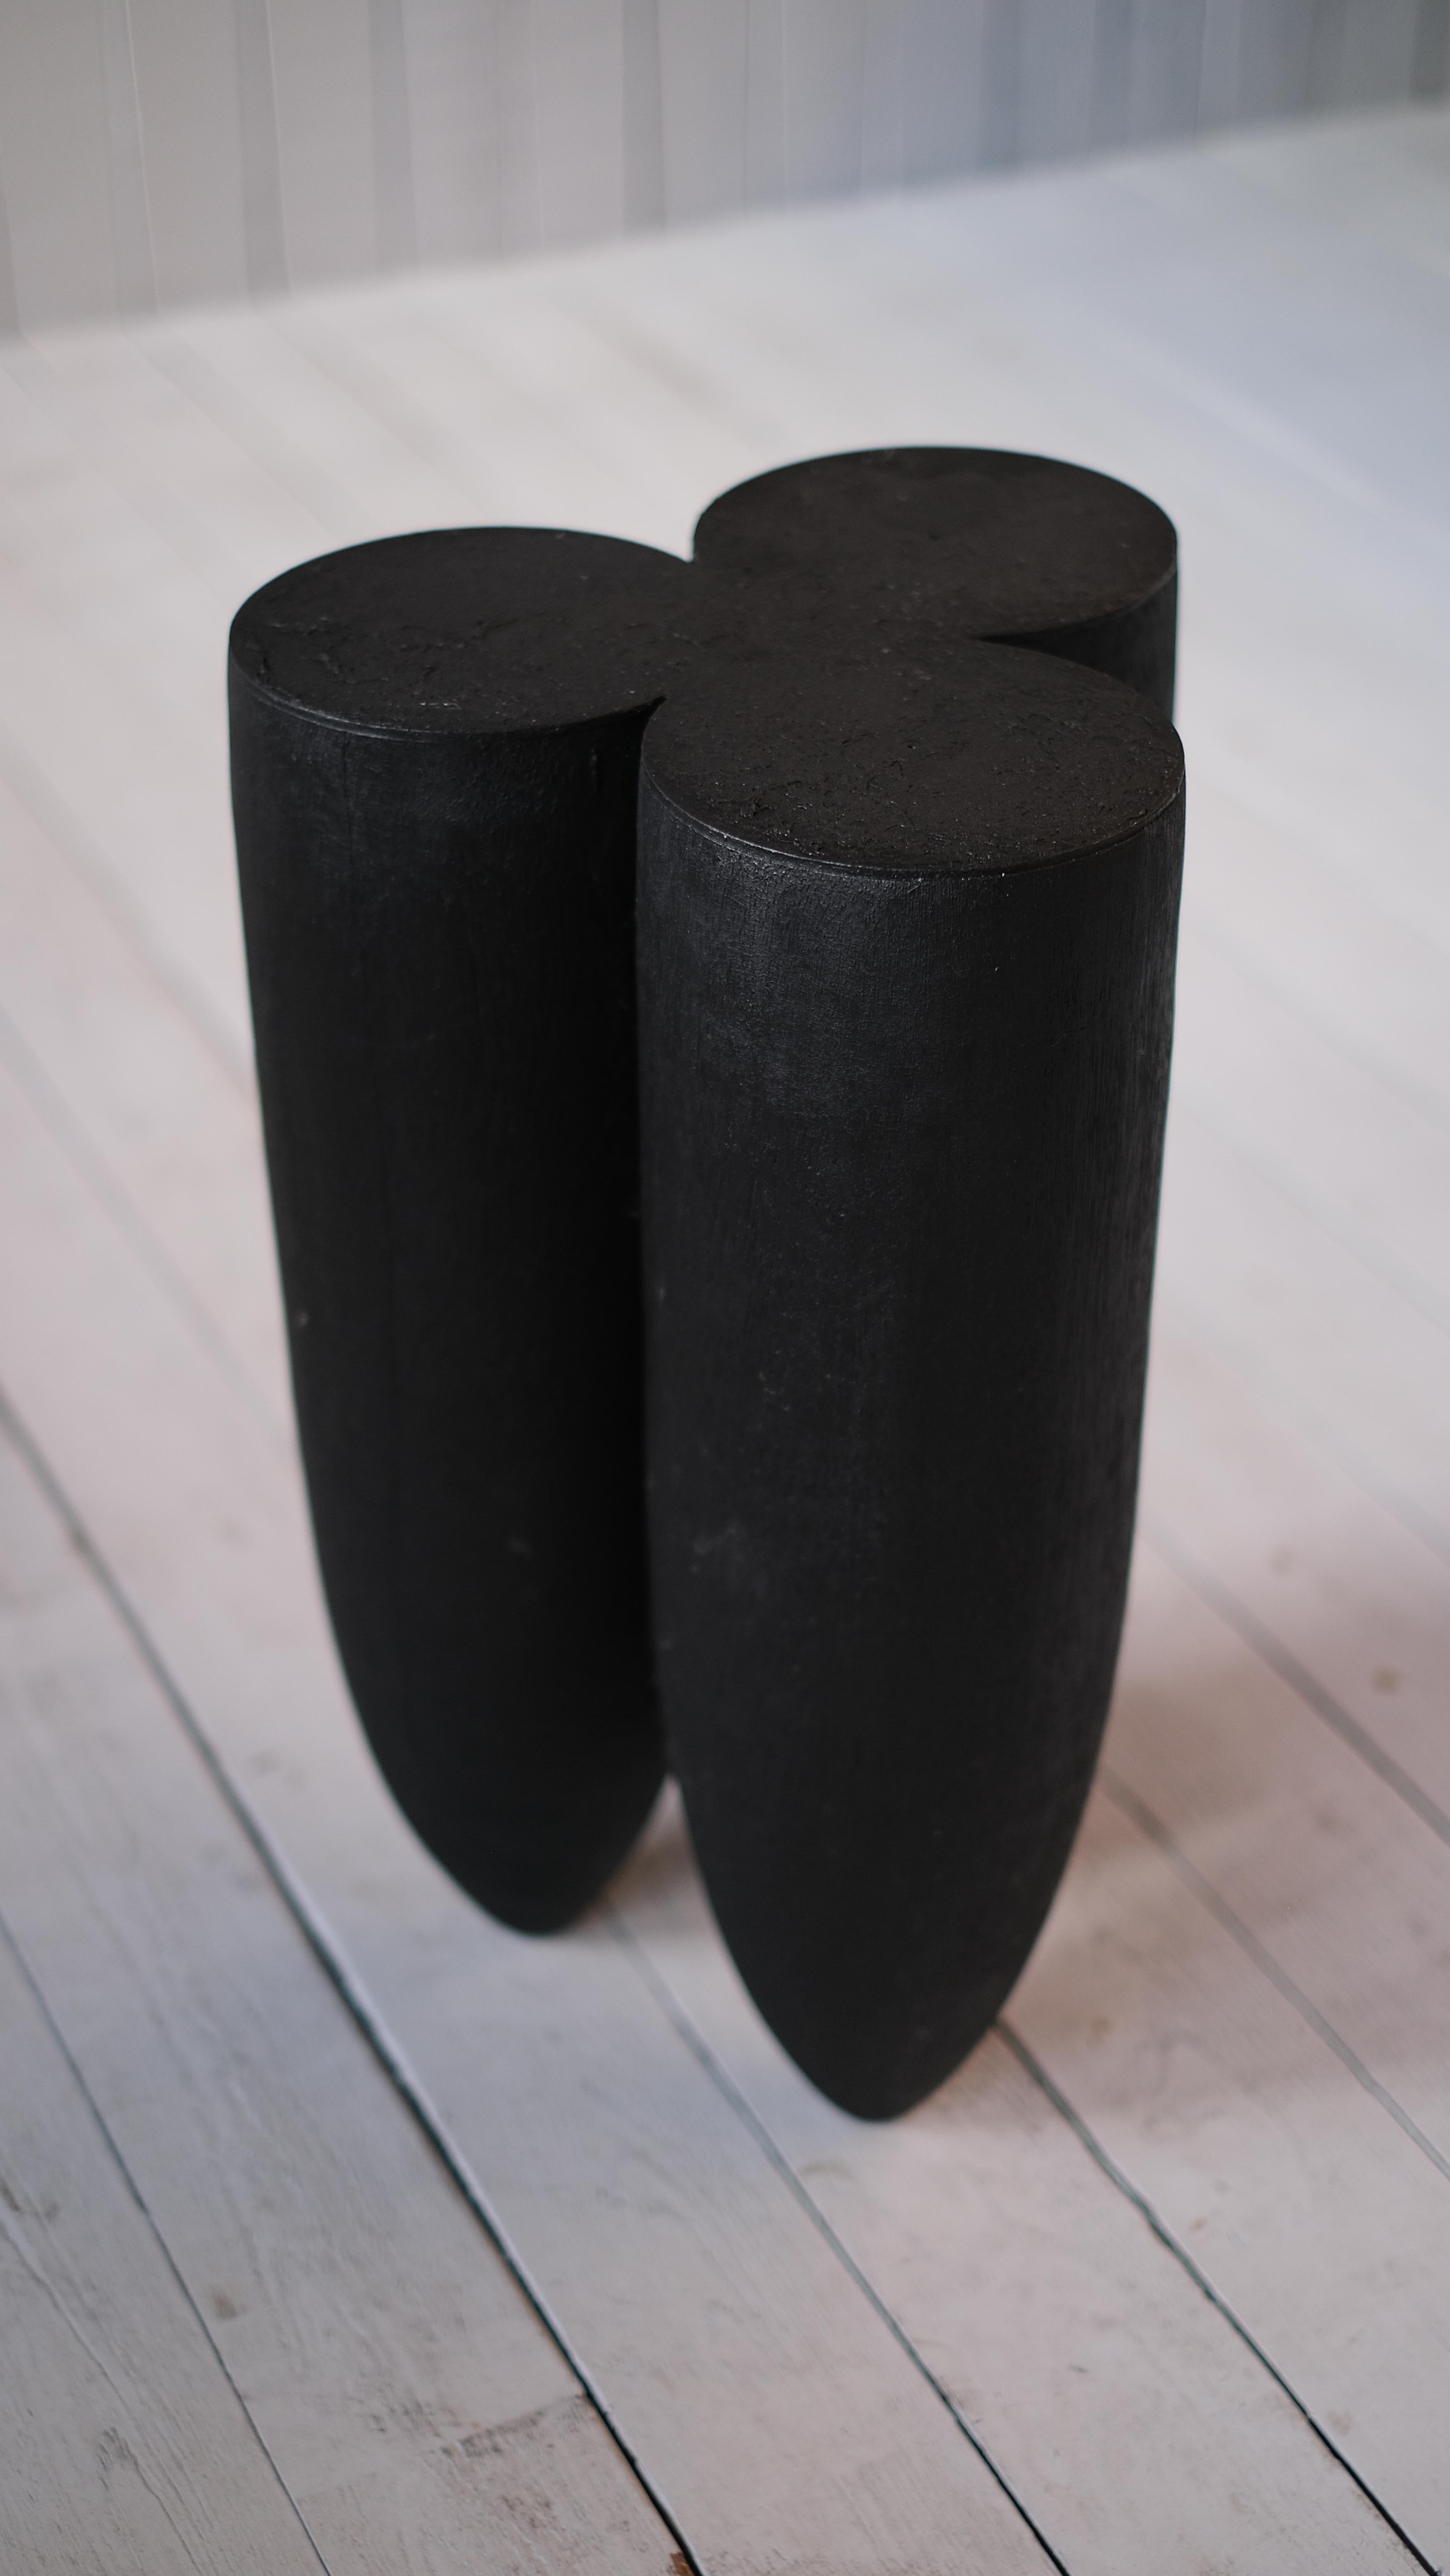 Senufo stool in Iroko wood by Arno Declercq.
Stool or side table.
Domensions: H 50 cm x D 30 cm / H 17.9” H x D 11.8”.
Materials: burned and waxed Iroko wood, burned steel.
Signed by Arno Declercq.

Arno Declercq
Belgian designer and art